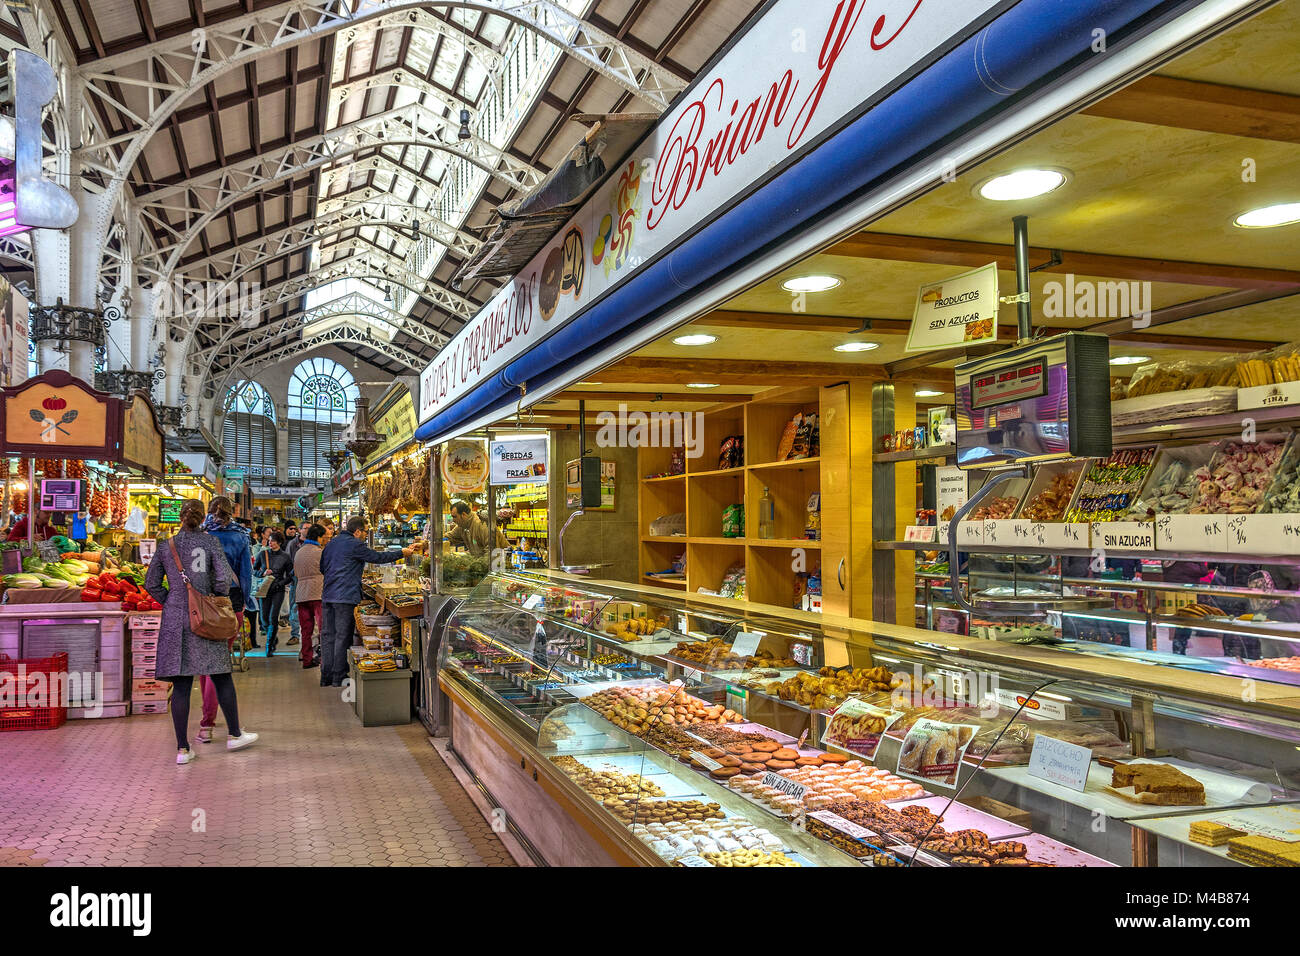 Indoor Market,Valencia Old Town, Spain Stock Photo